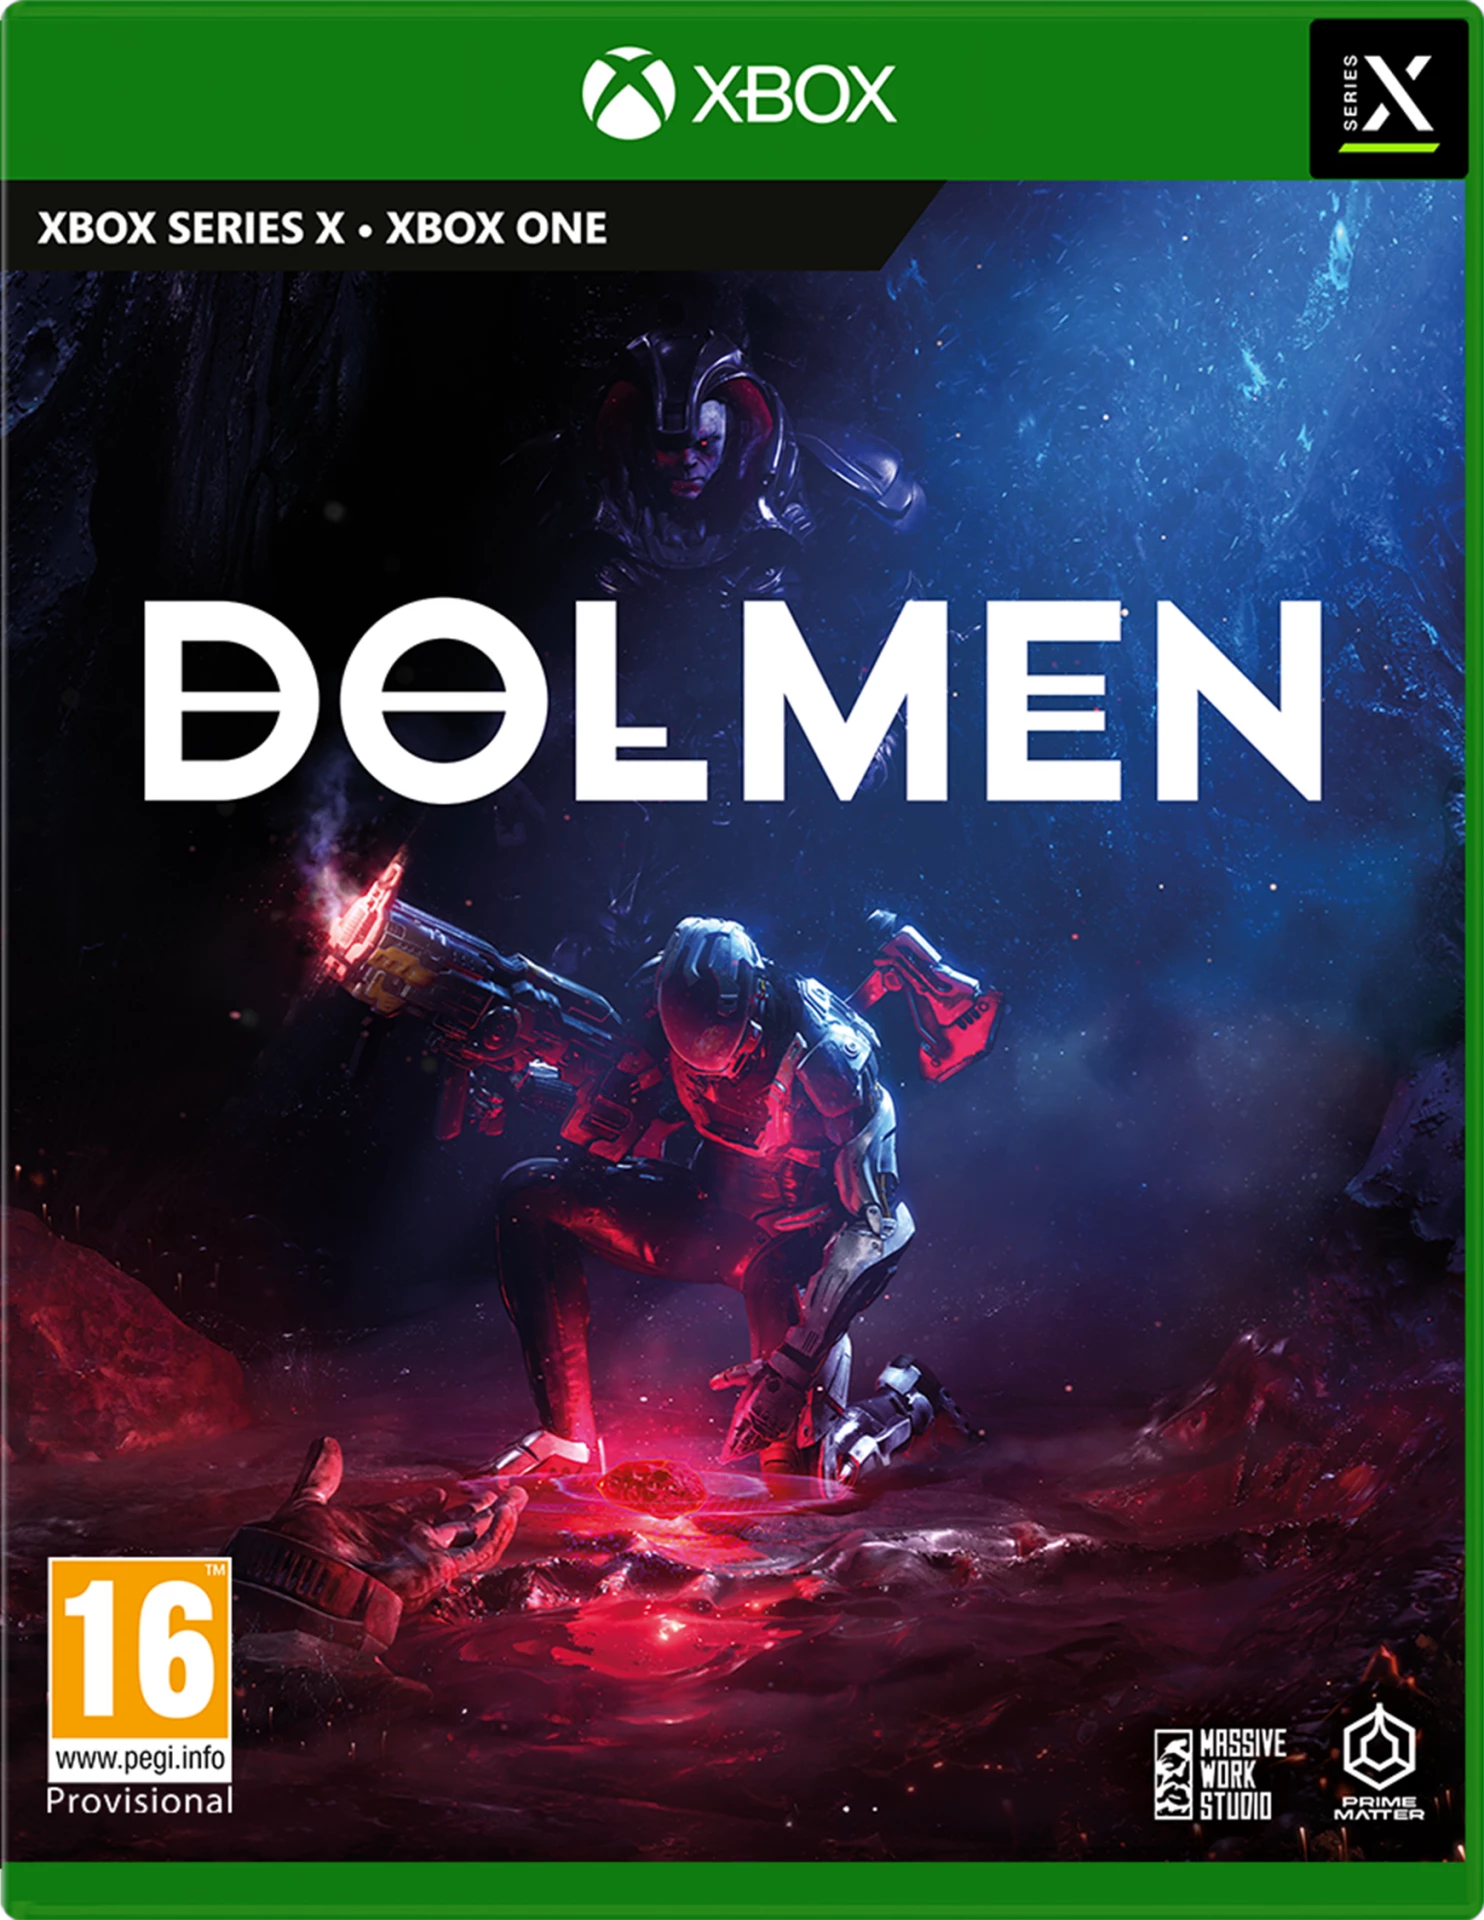 DOLMEN - Day One Edition (Xbox Series X), Prime Matter